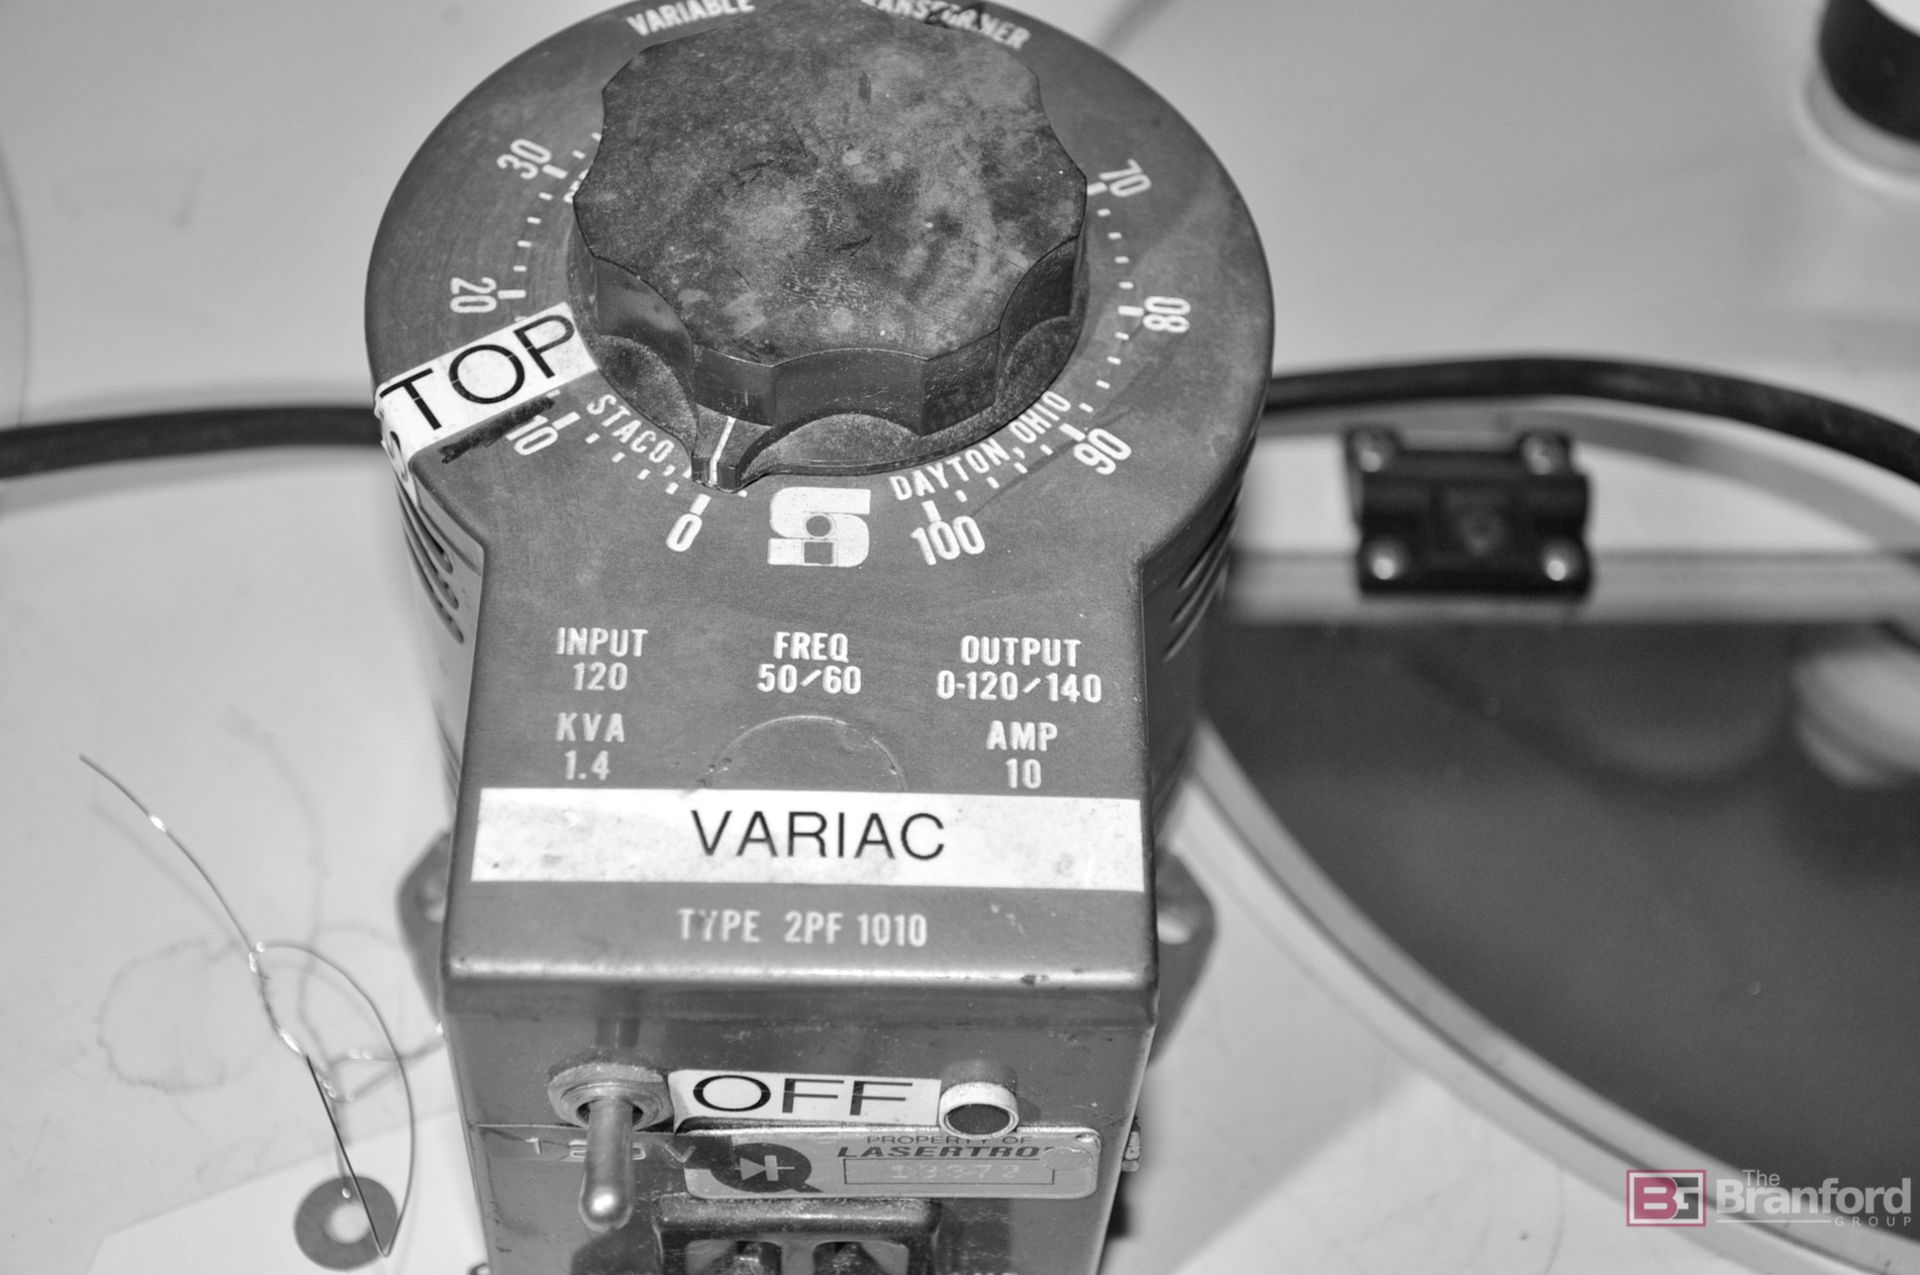 Variac type 2PF 1010, 1.4 KVA - Image 2 of 2